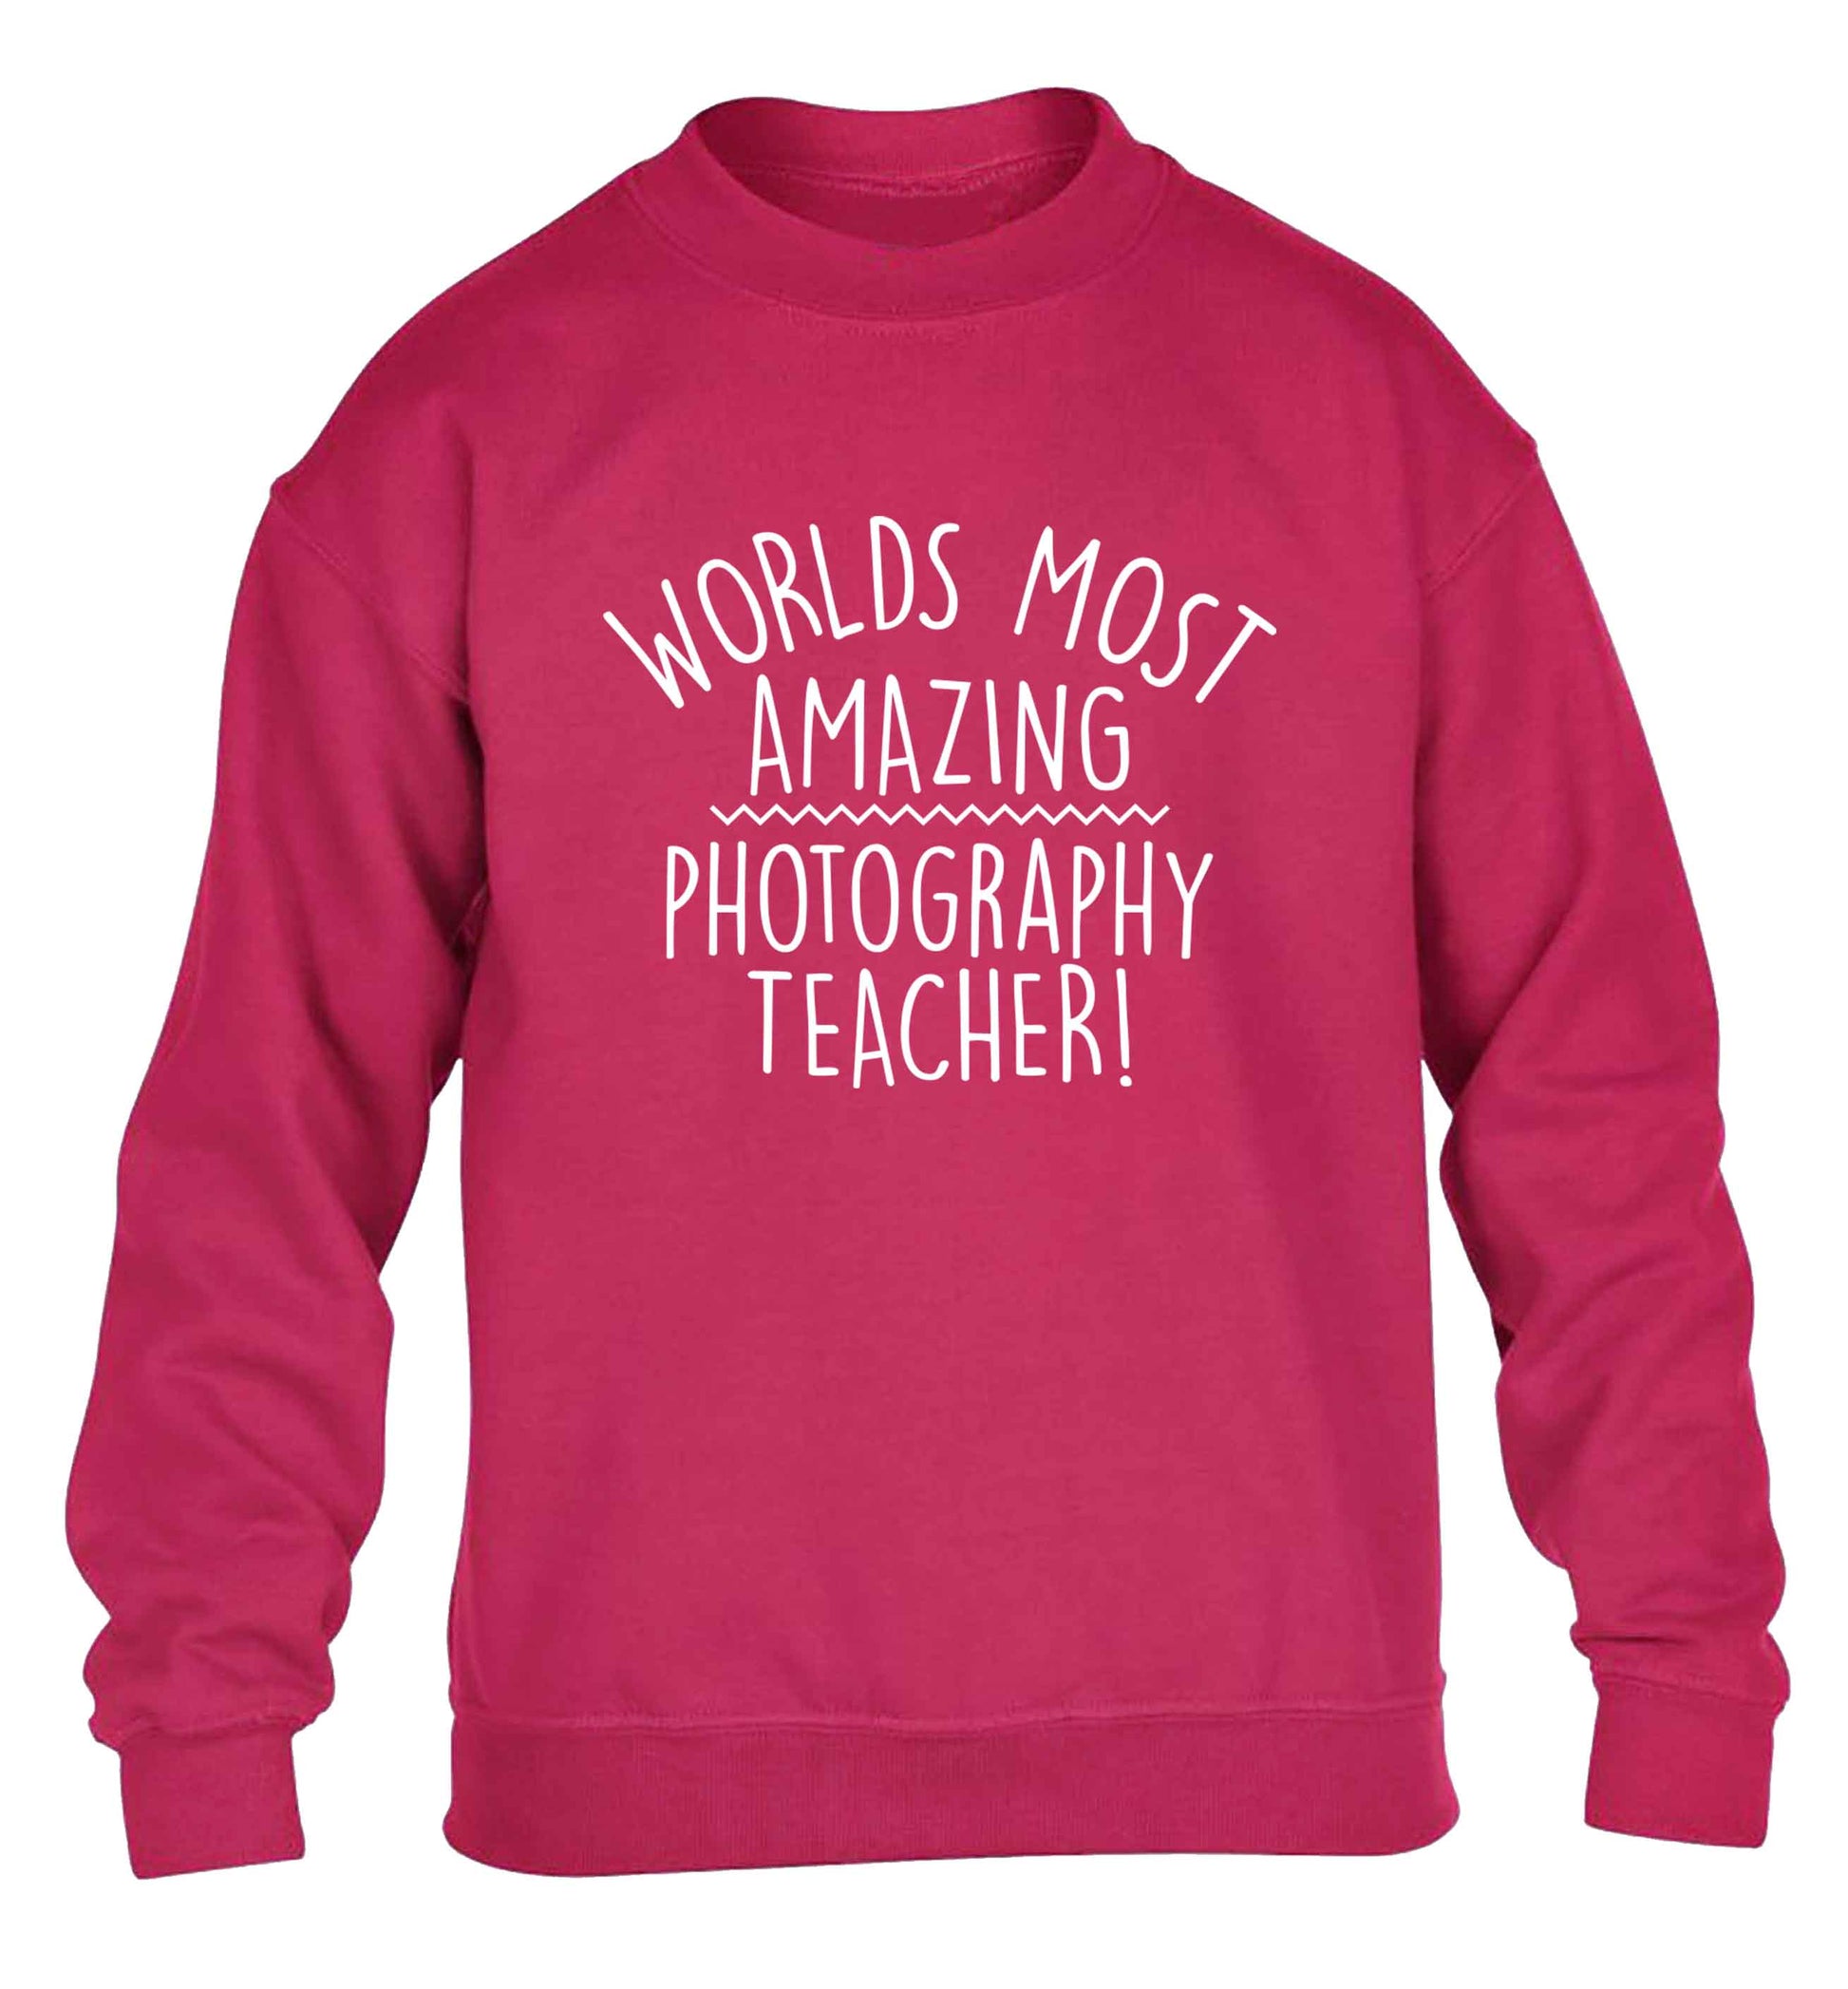 Worlds most amazing photography teacher children's pink sweater 12-13 Years